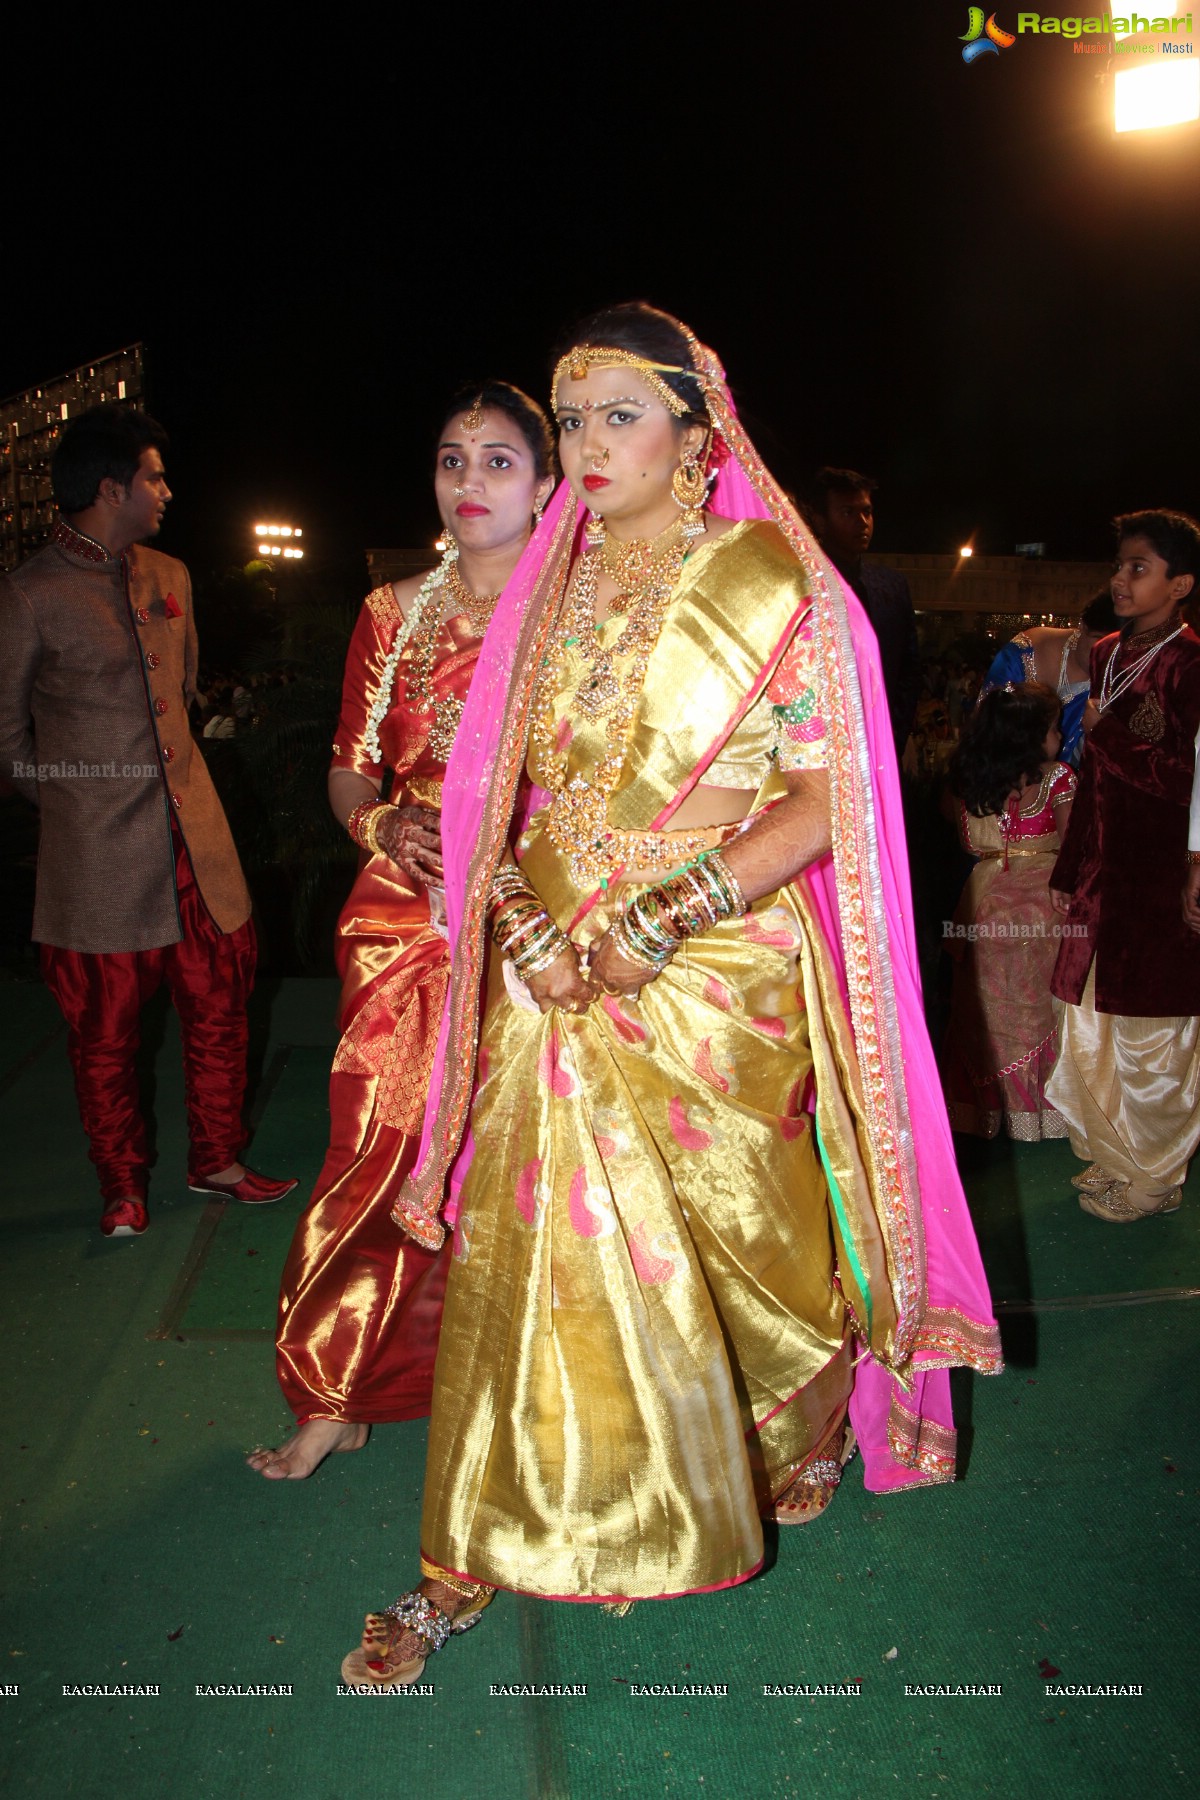 Grand Wedding Ceremony of Arjun Kumar Goud-Ruchika